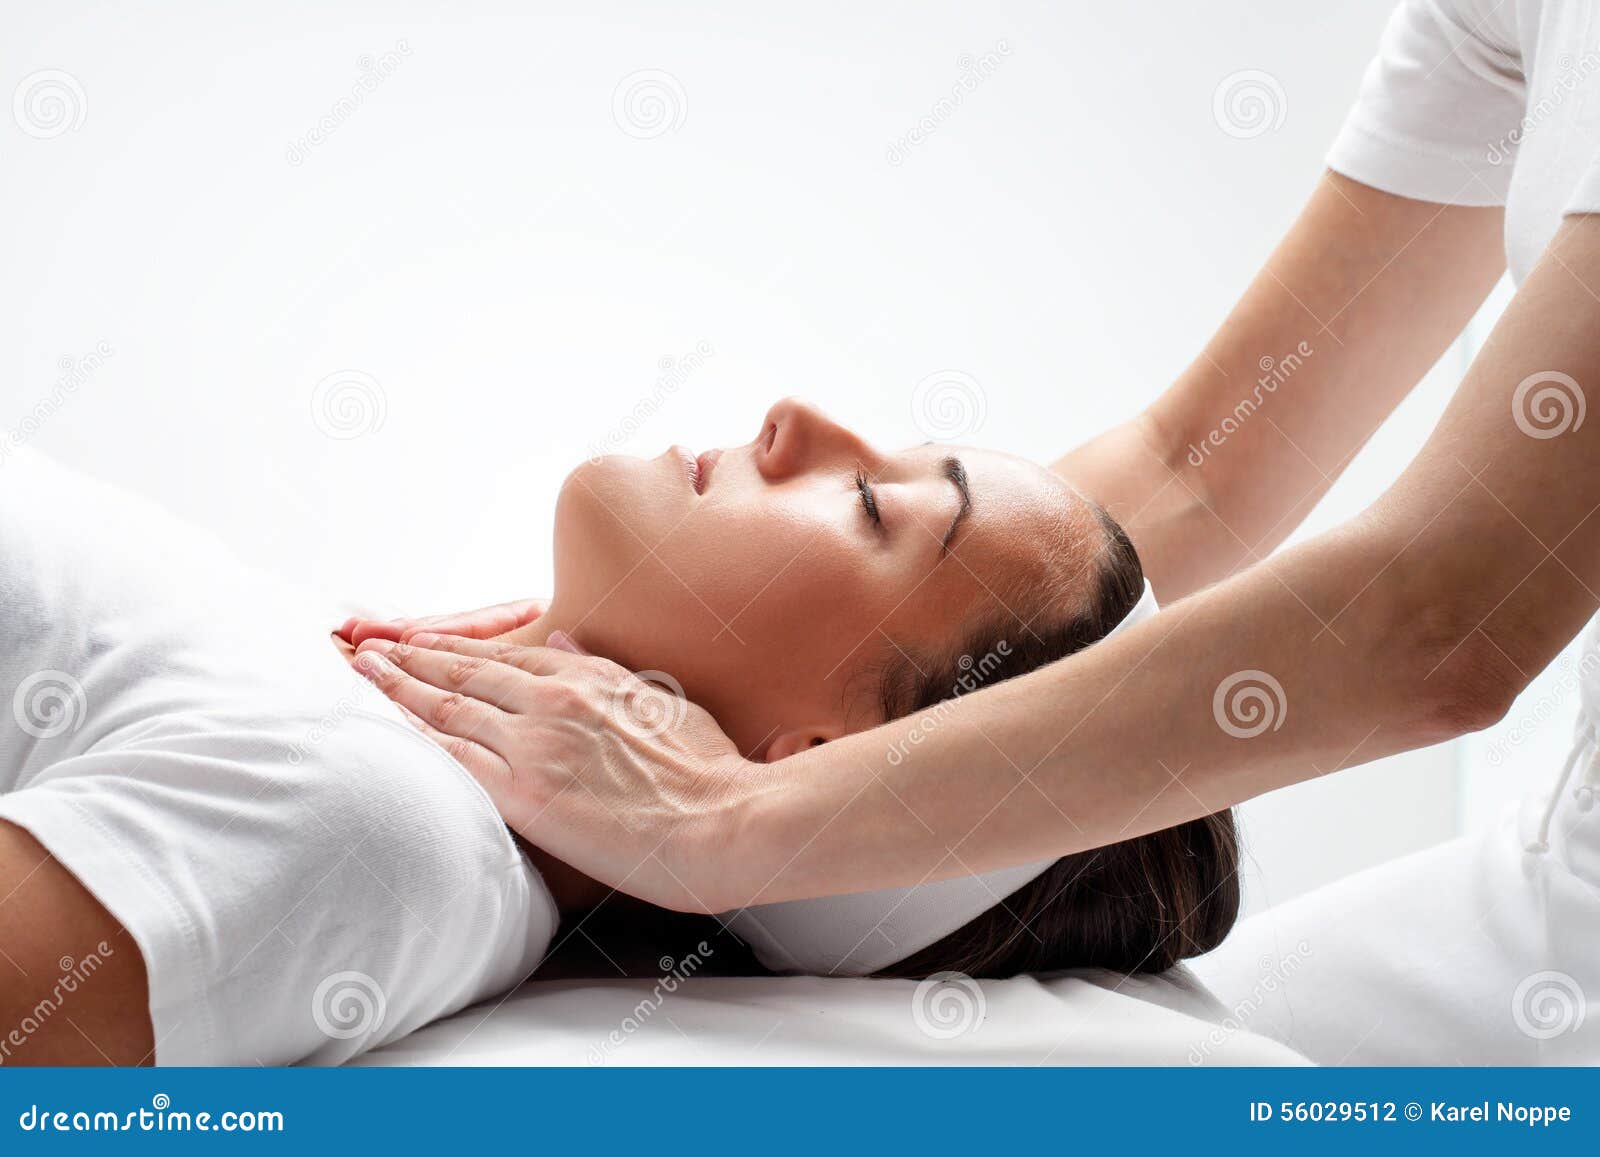 therapist doing reiki on womanÃ¢â¬â¢s neck.